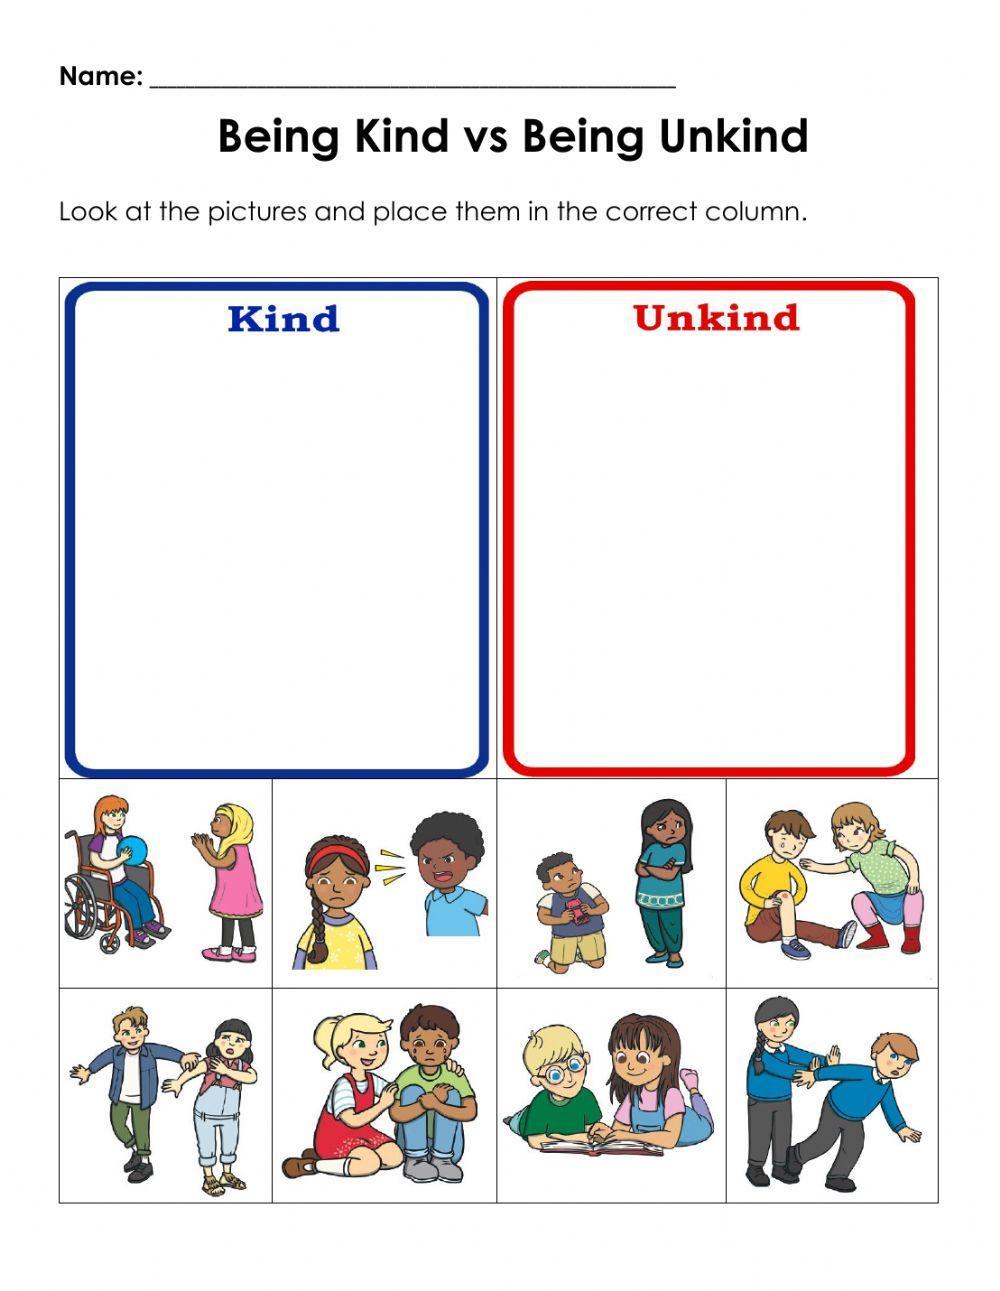 Kindness vs Unkindness Sorting